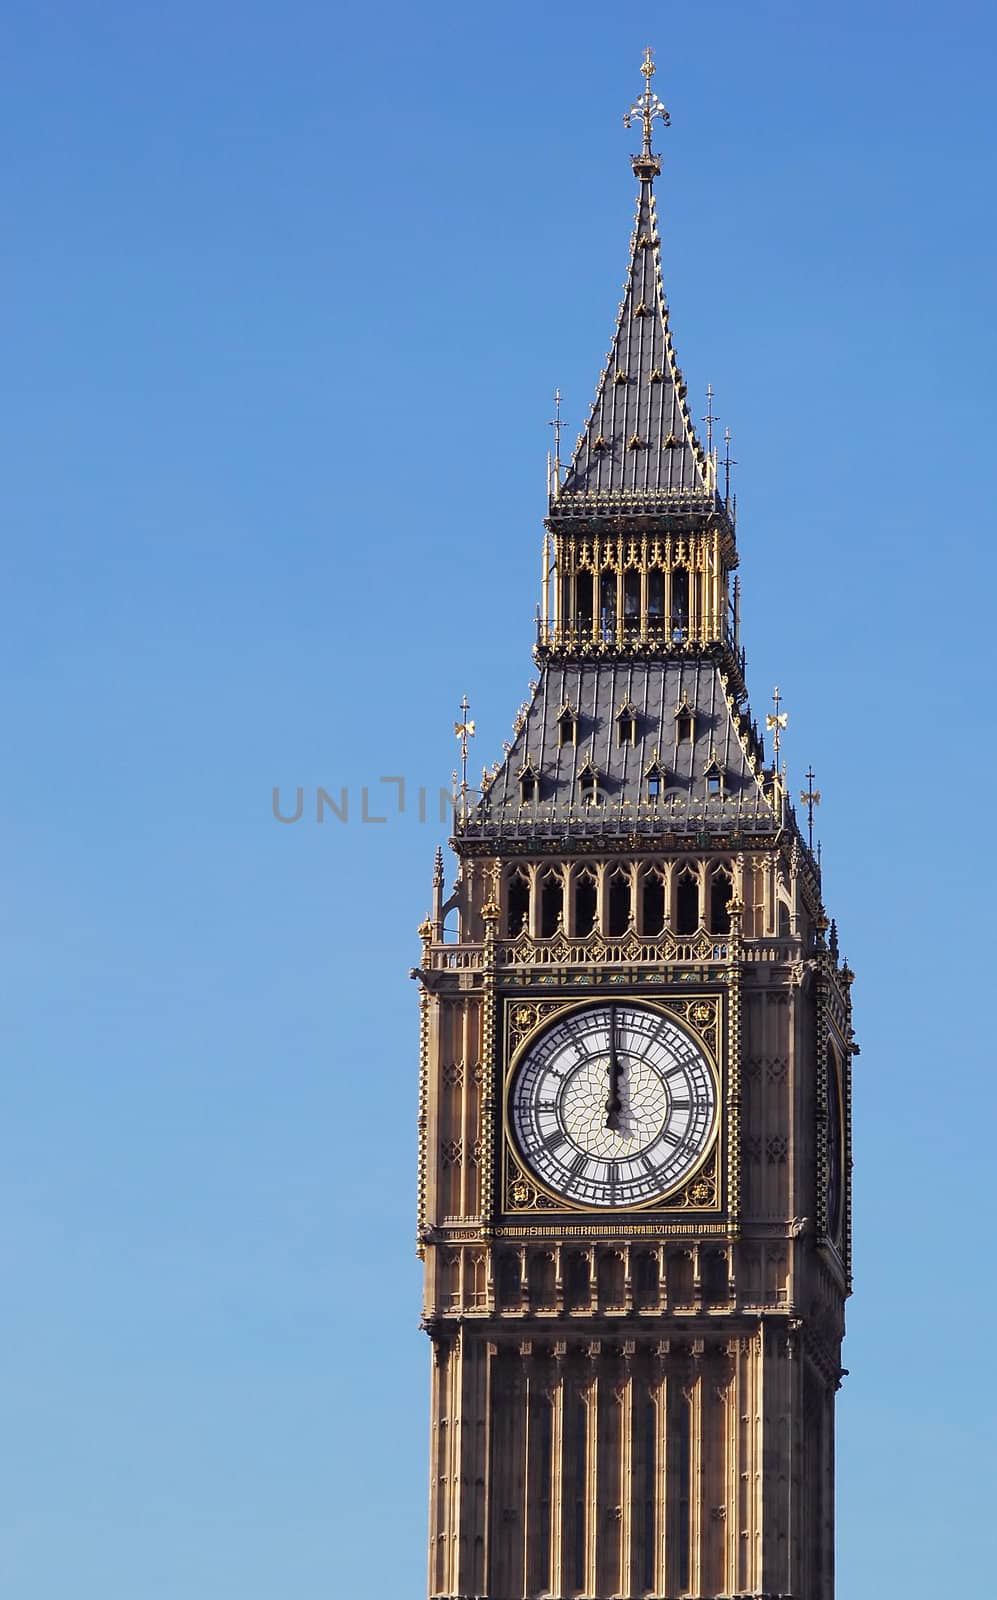 noon striking london's big ben clock tower